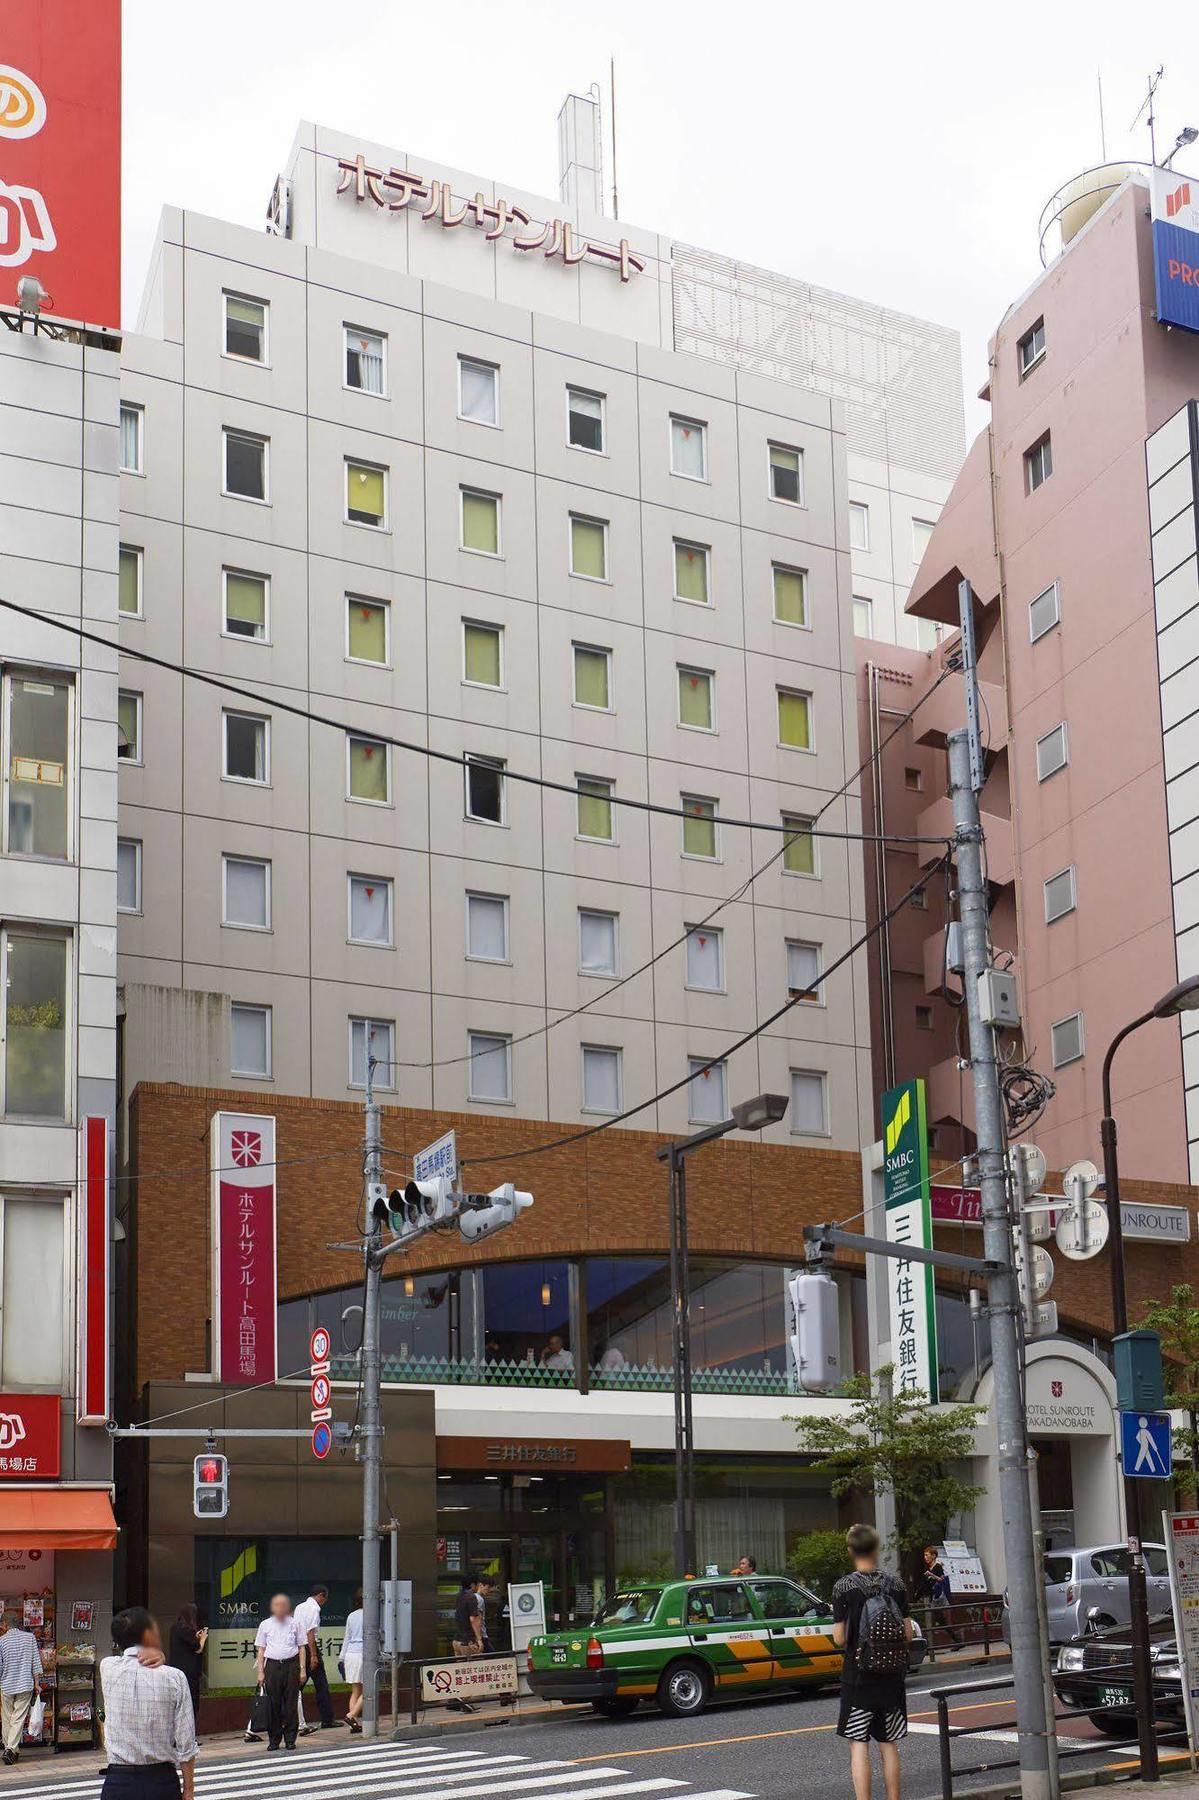 Hotel Sunroute Takadanobaba Токио Экстерьер фото